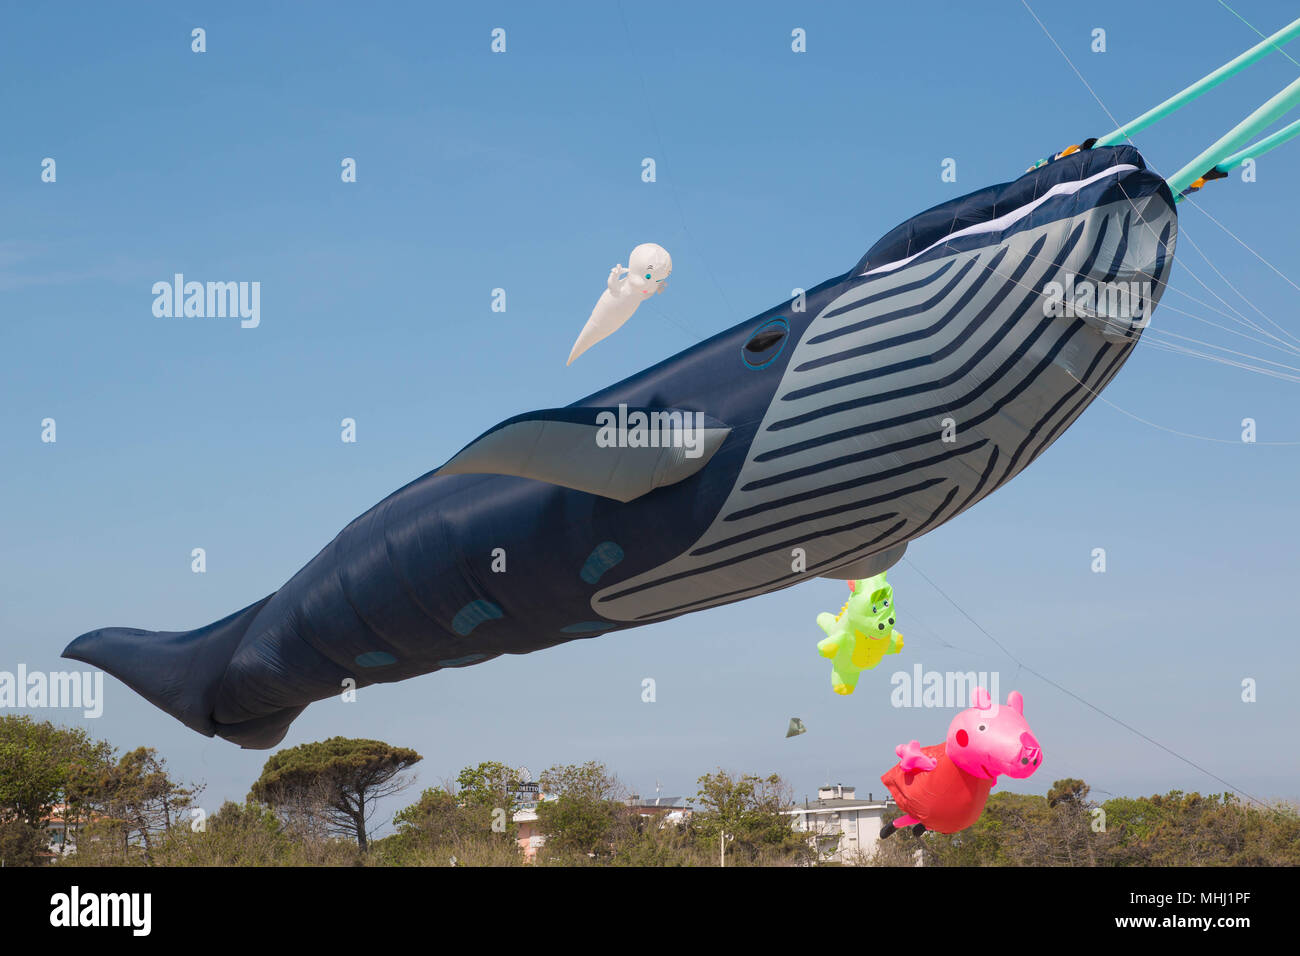 whale kite in natural dimensions at Cervia international kite festival 'Artevento' 2018. Stock Photo